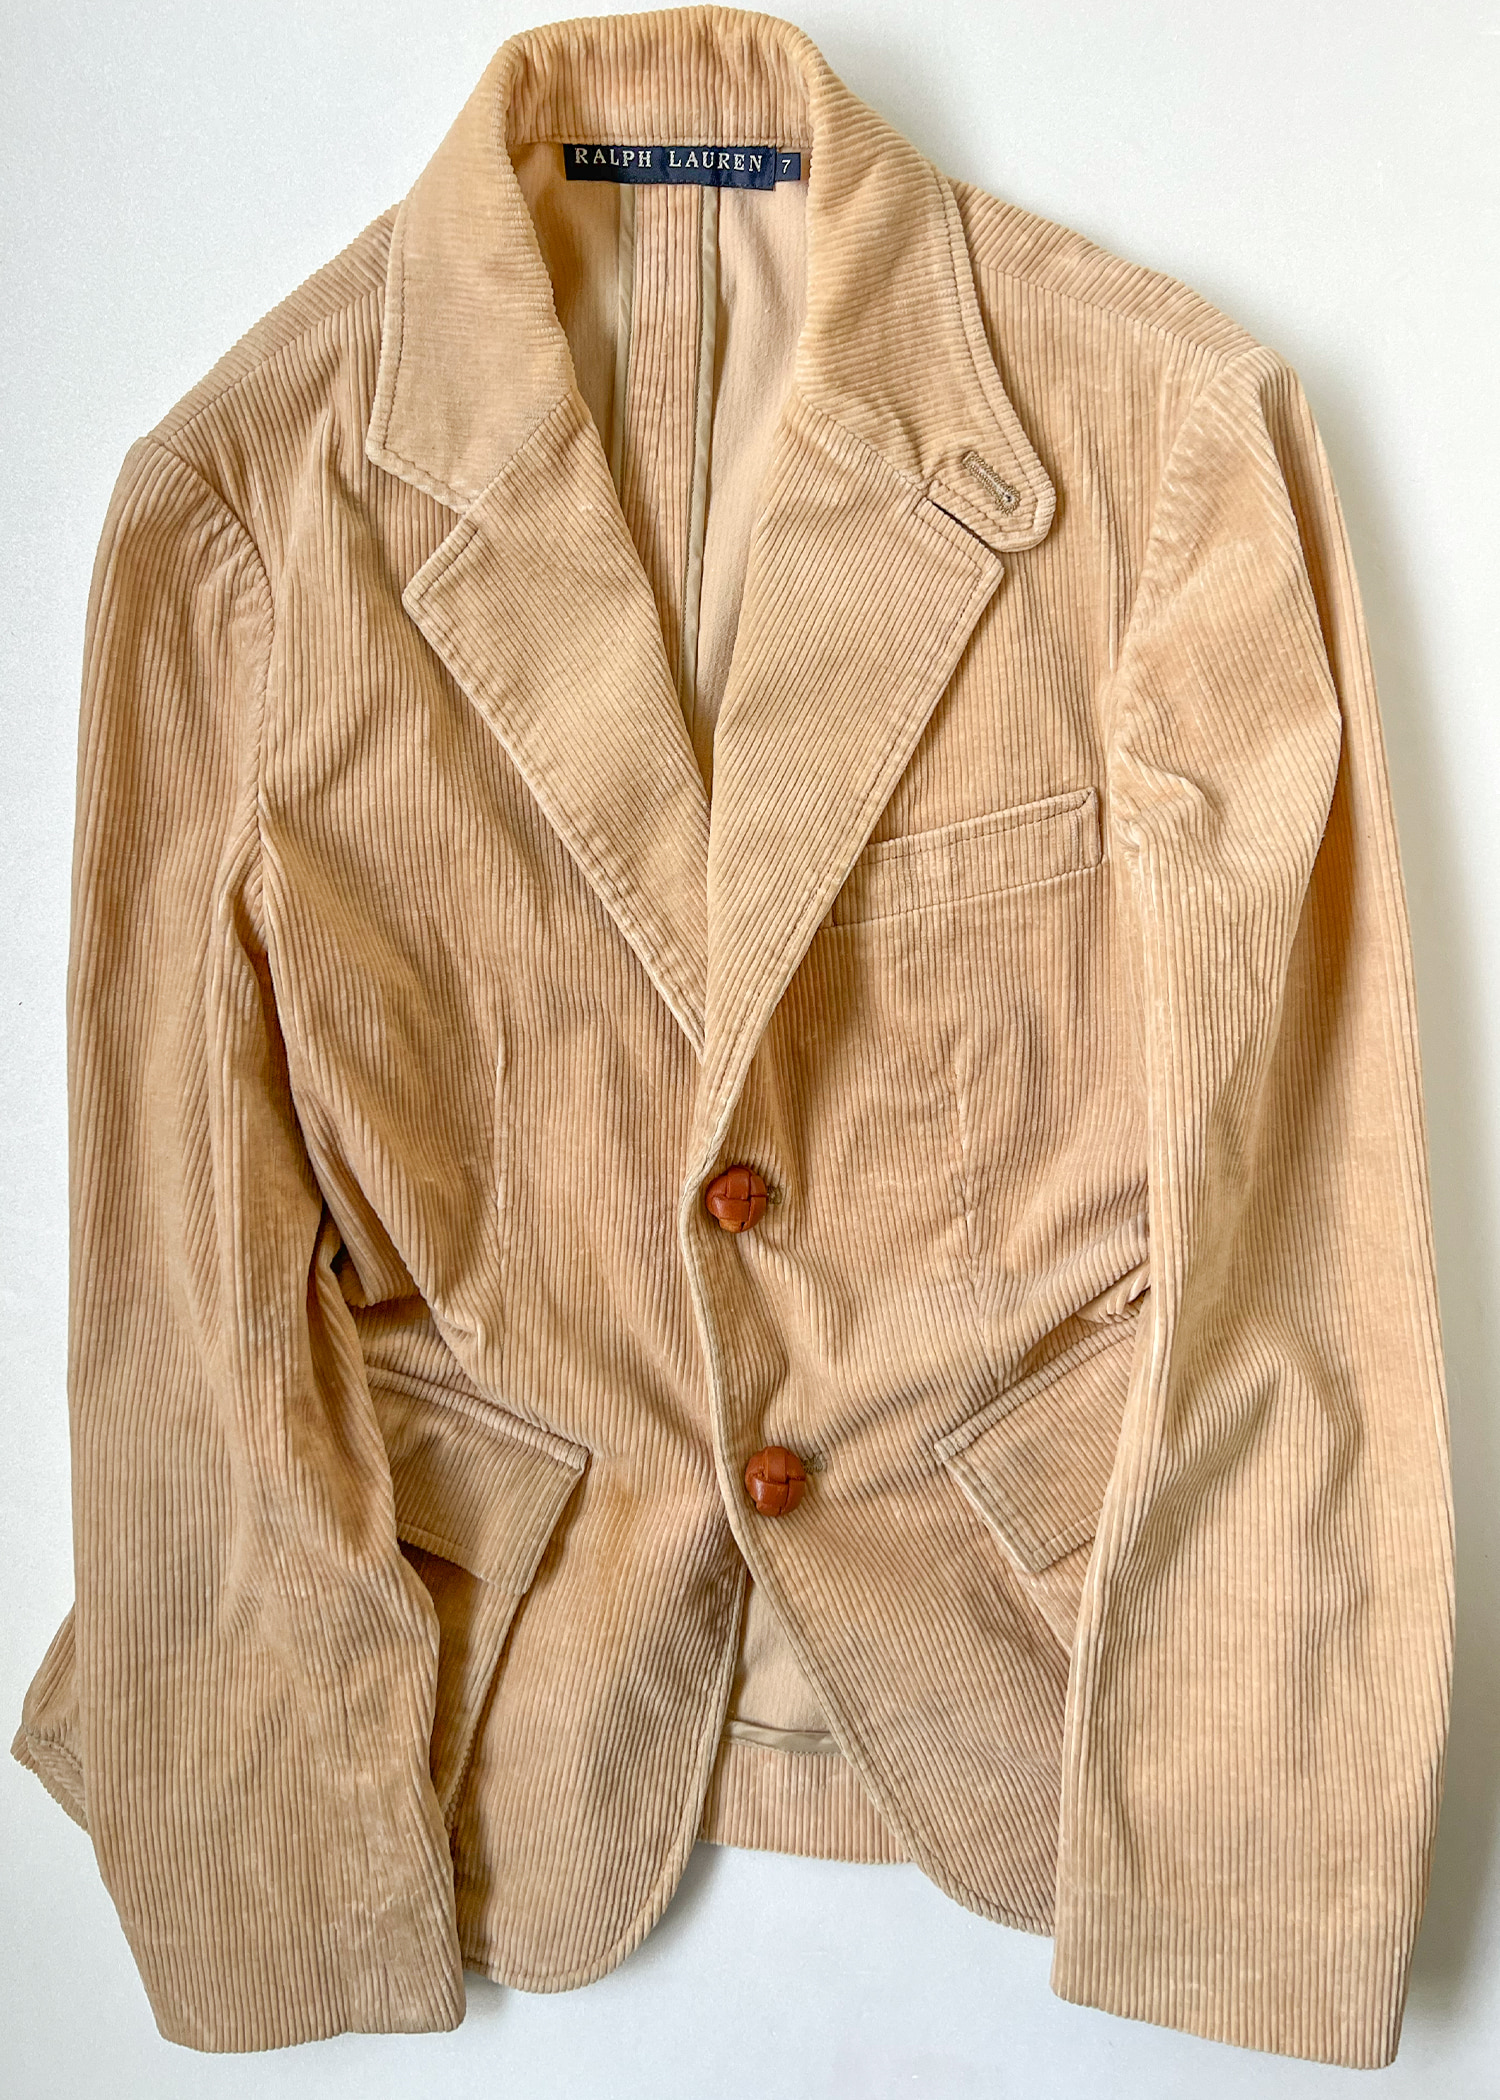 Polo by Ralph Lauren corduroy jacket